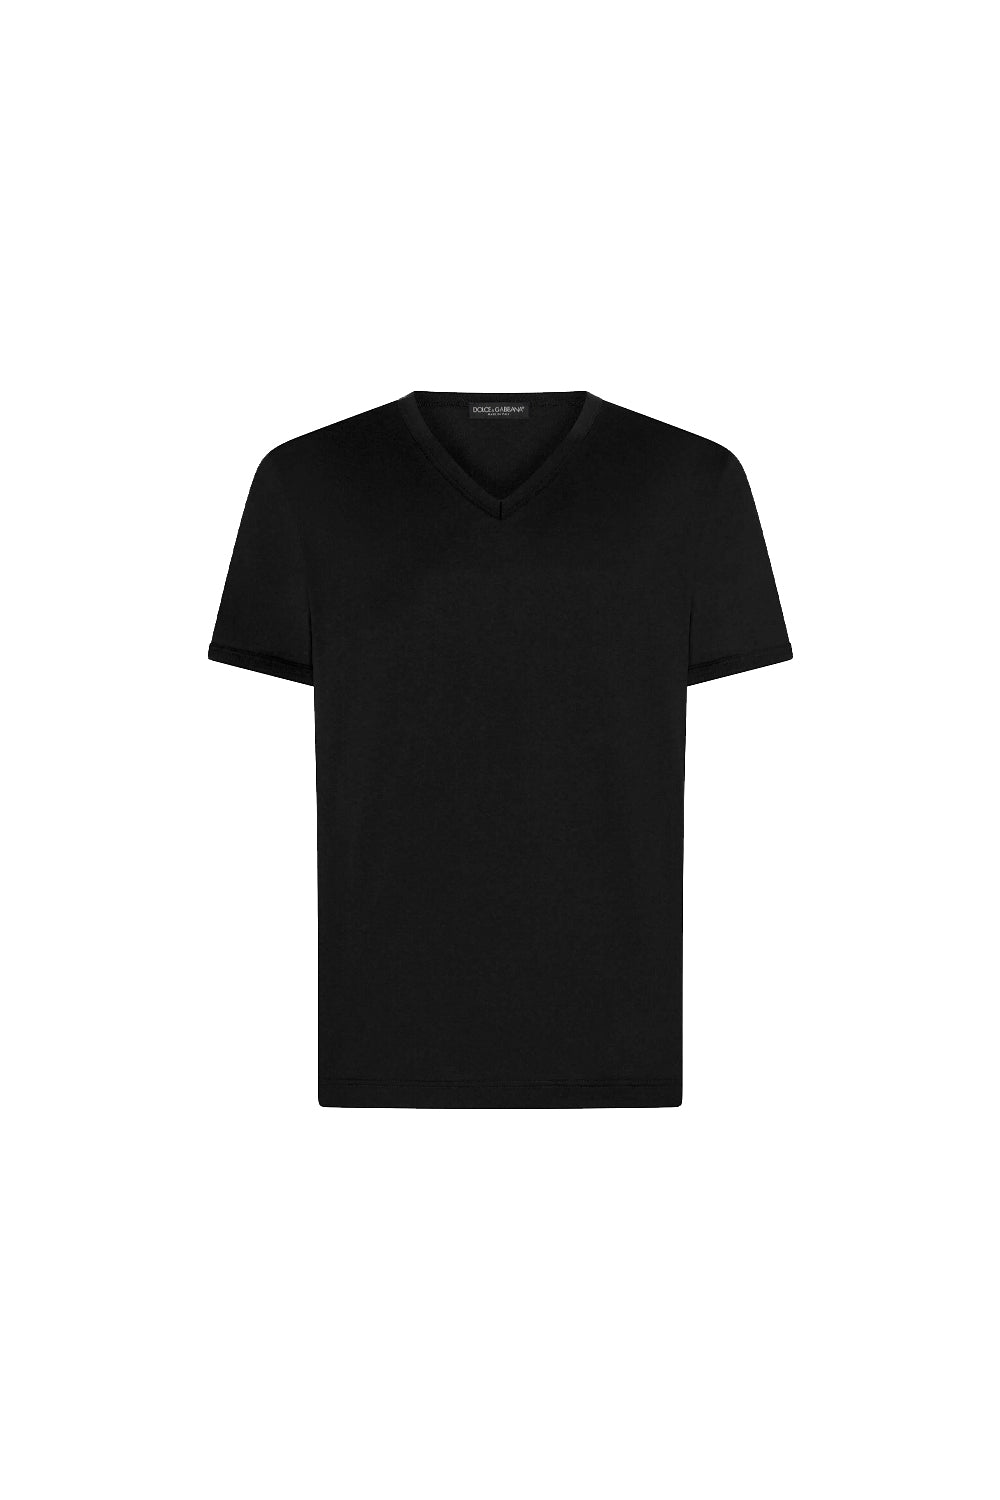 DOLCE & GABBANA T-shirt neck logo tag black